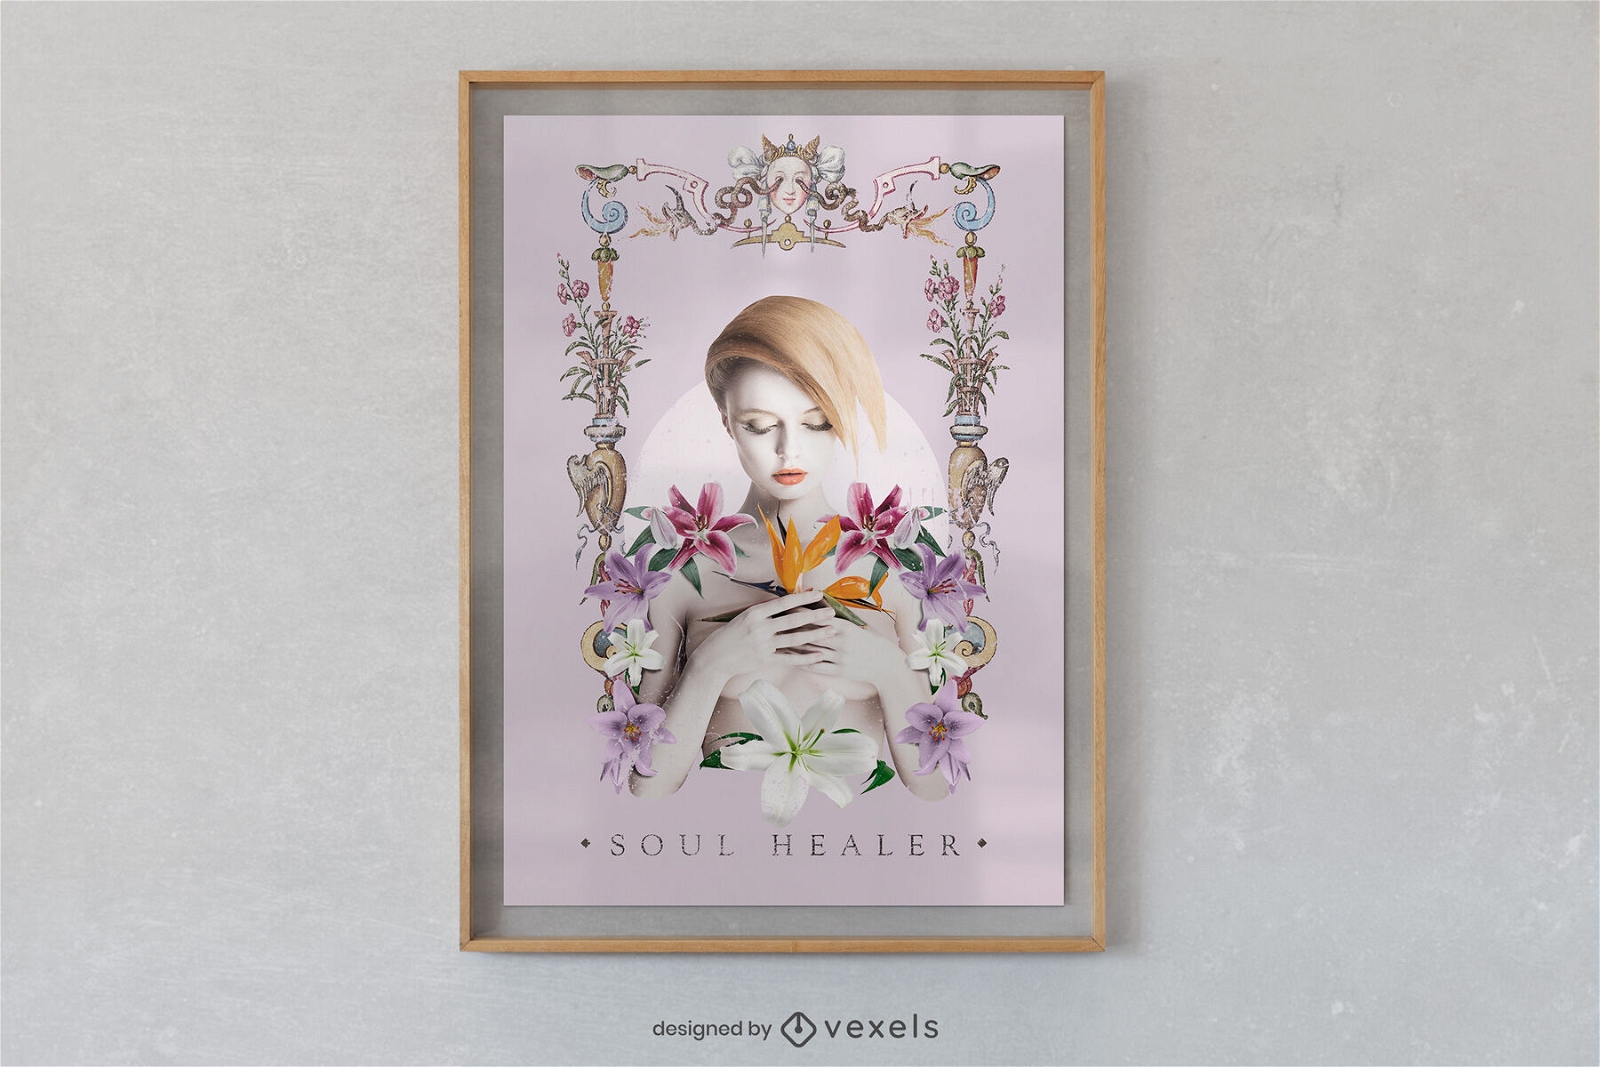 Woman soul healer poster design